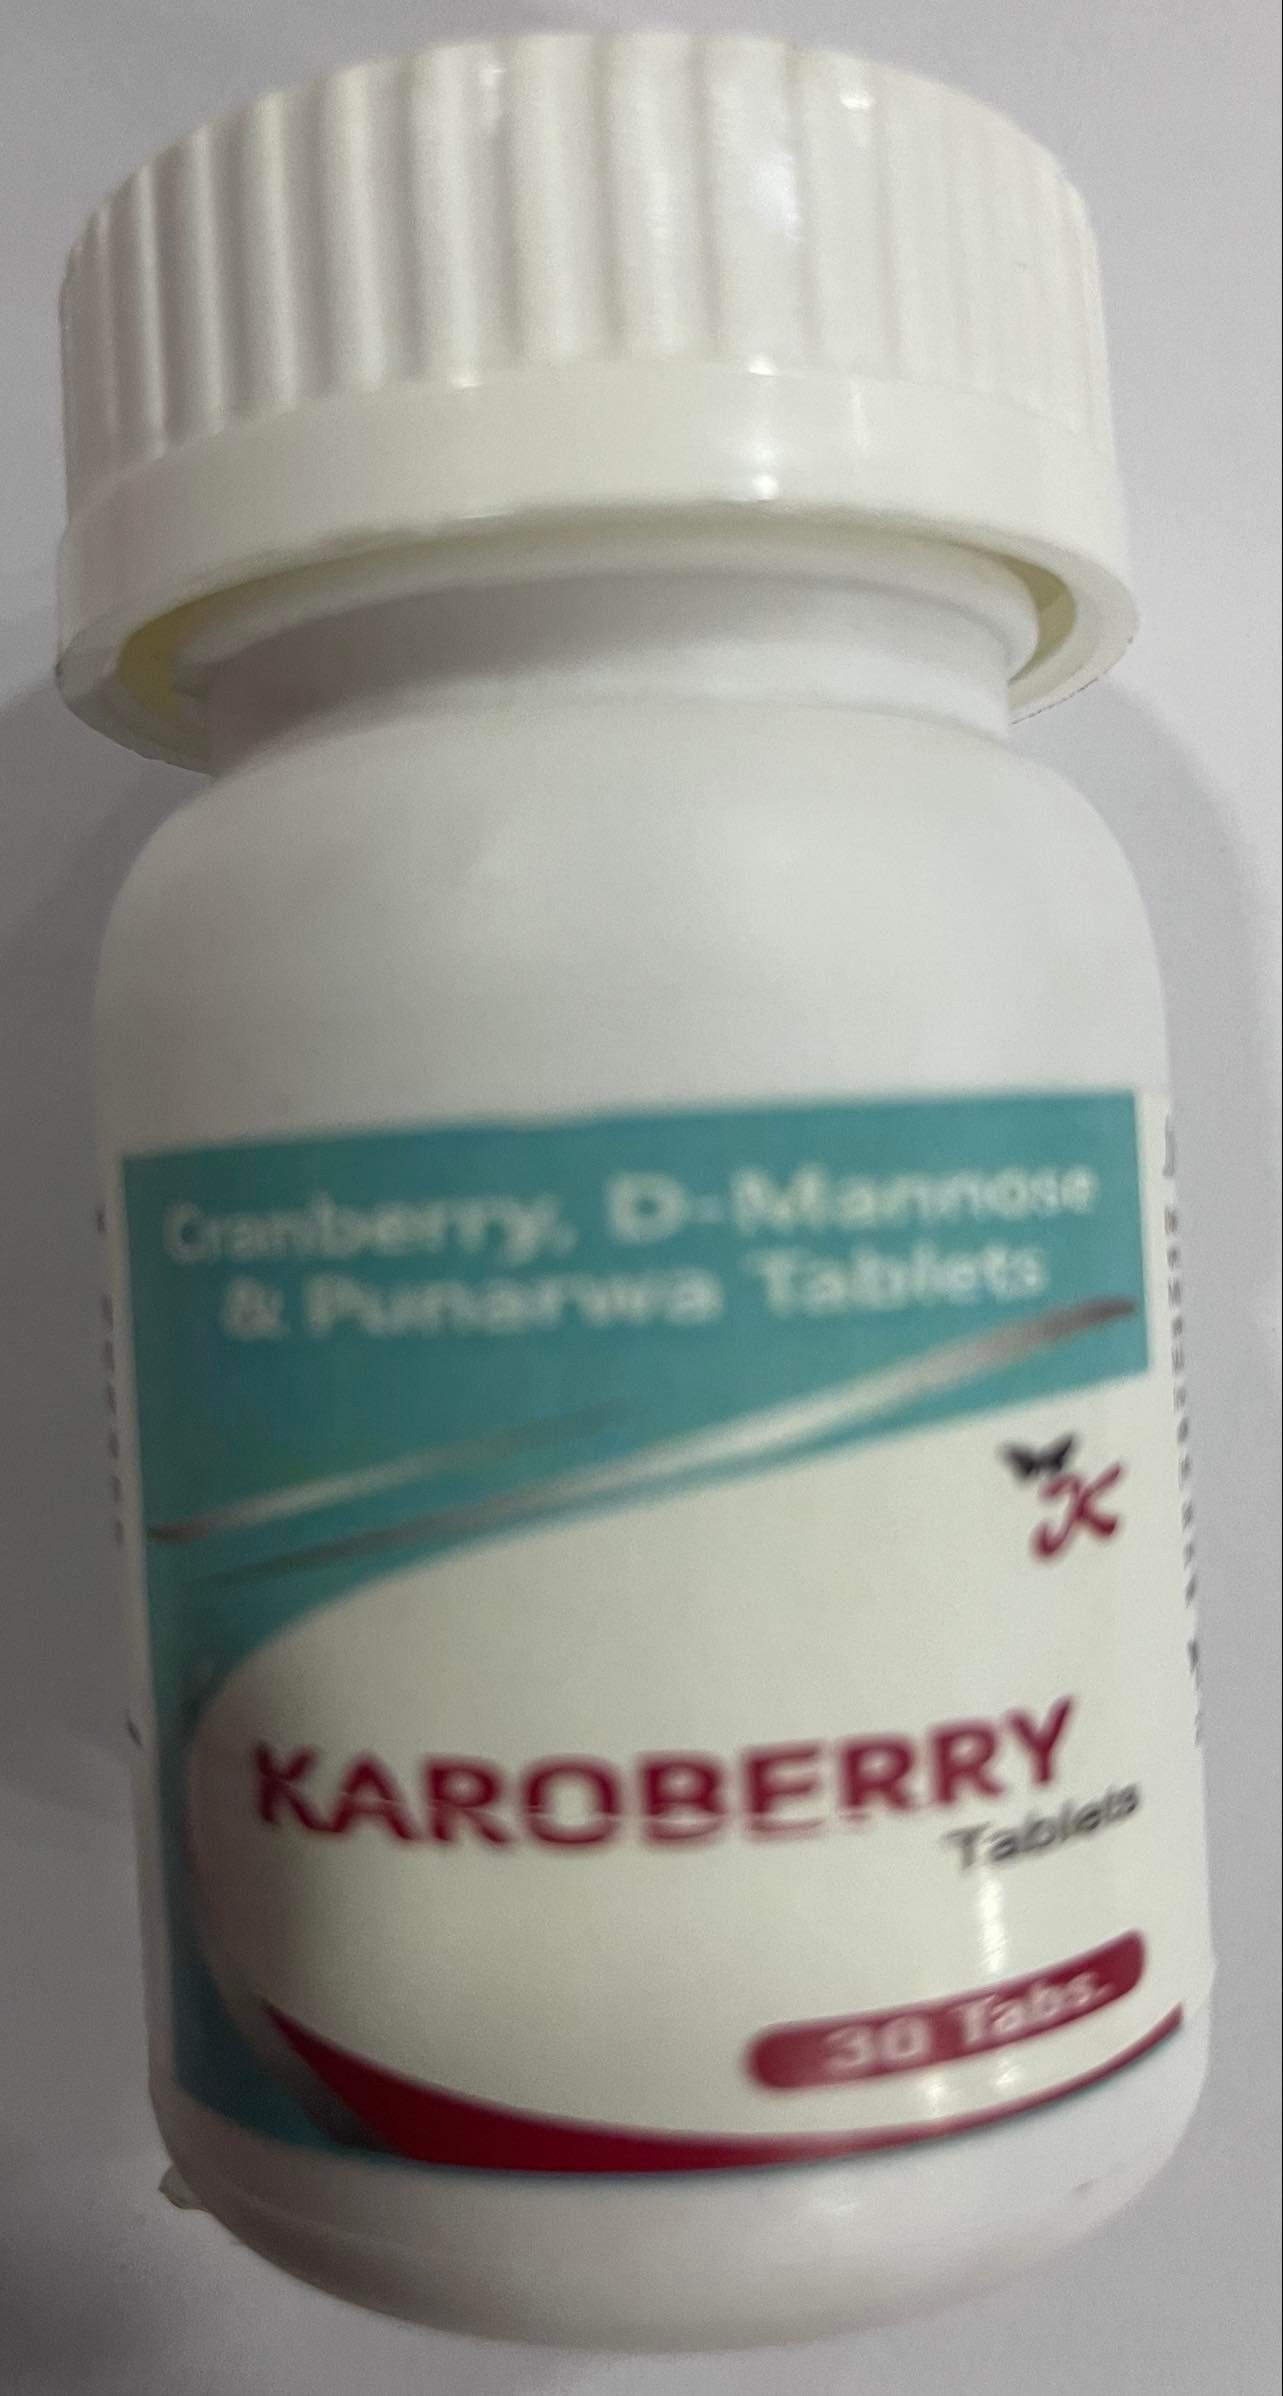 Karoberry Tablet (30tab)